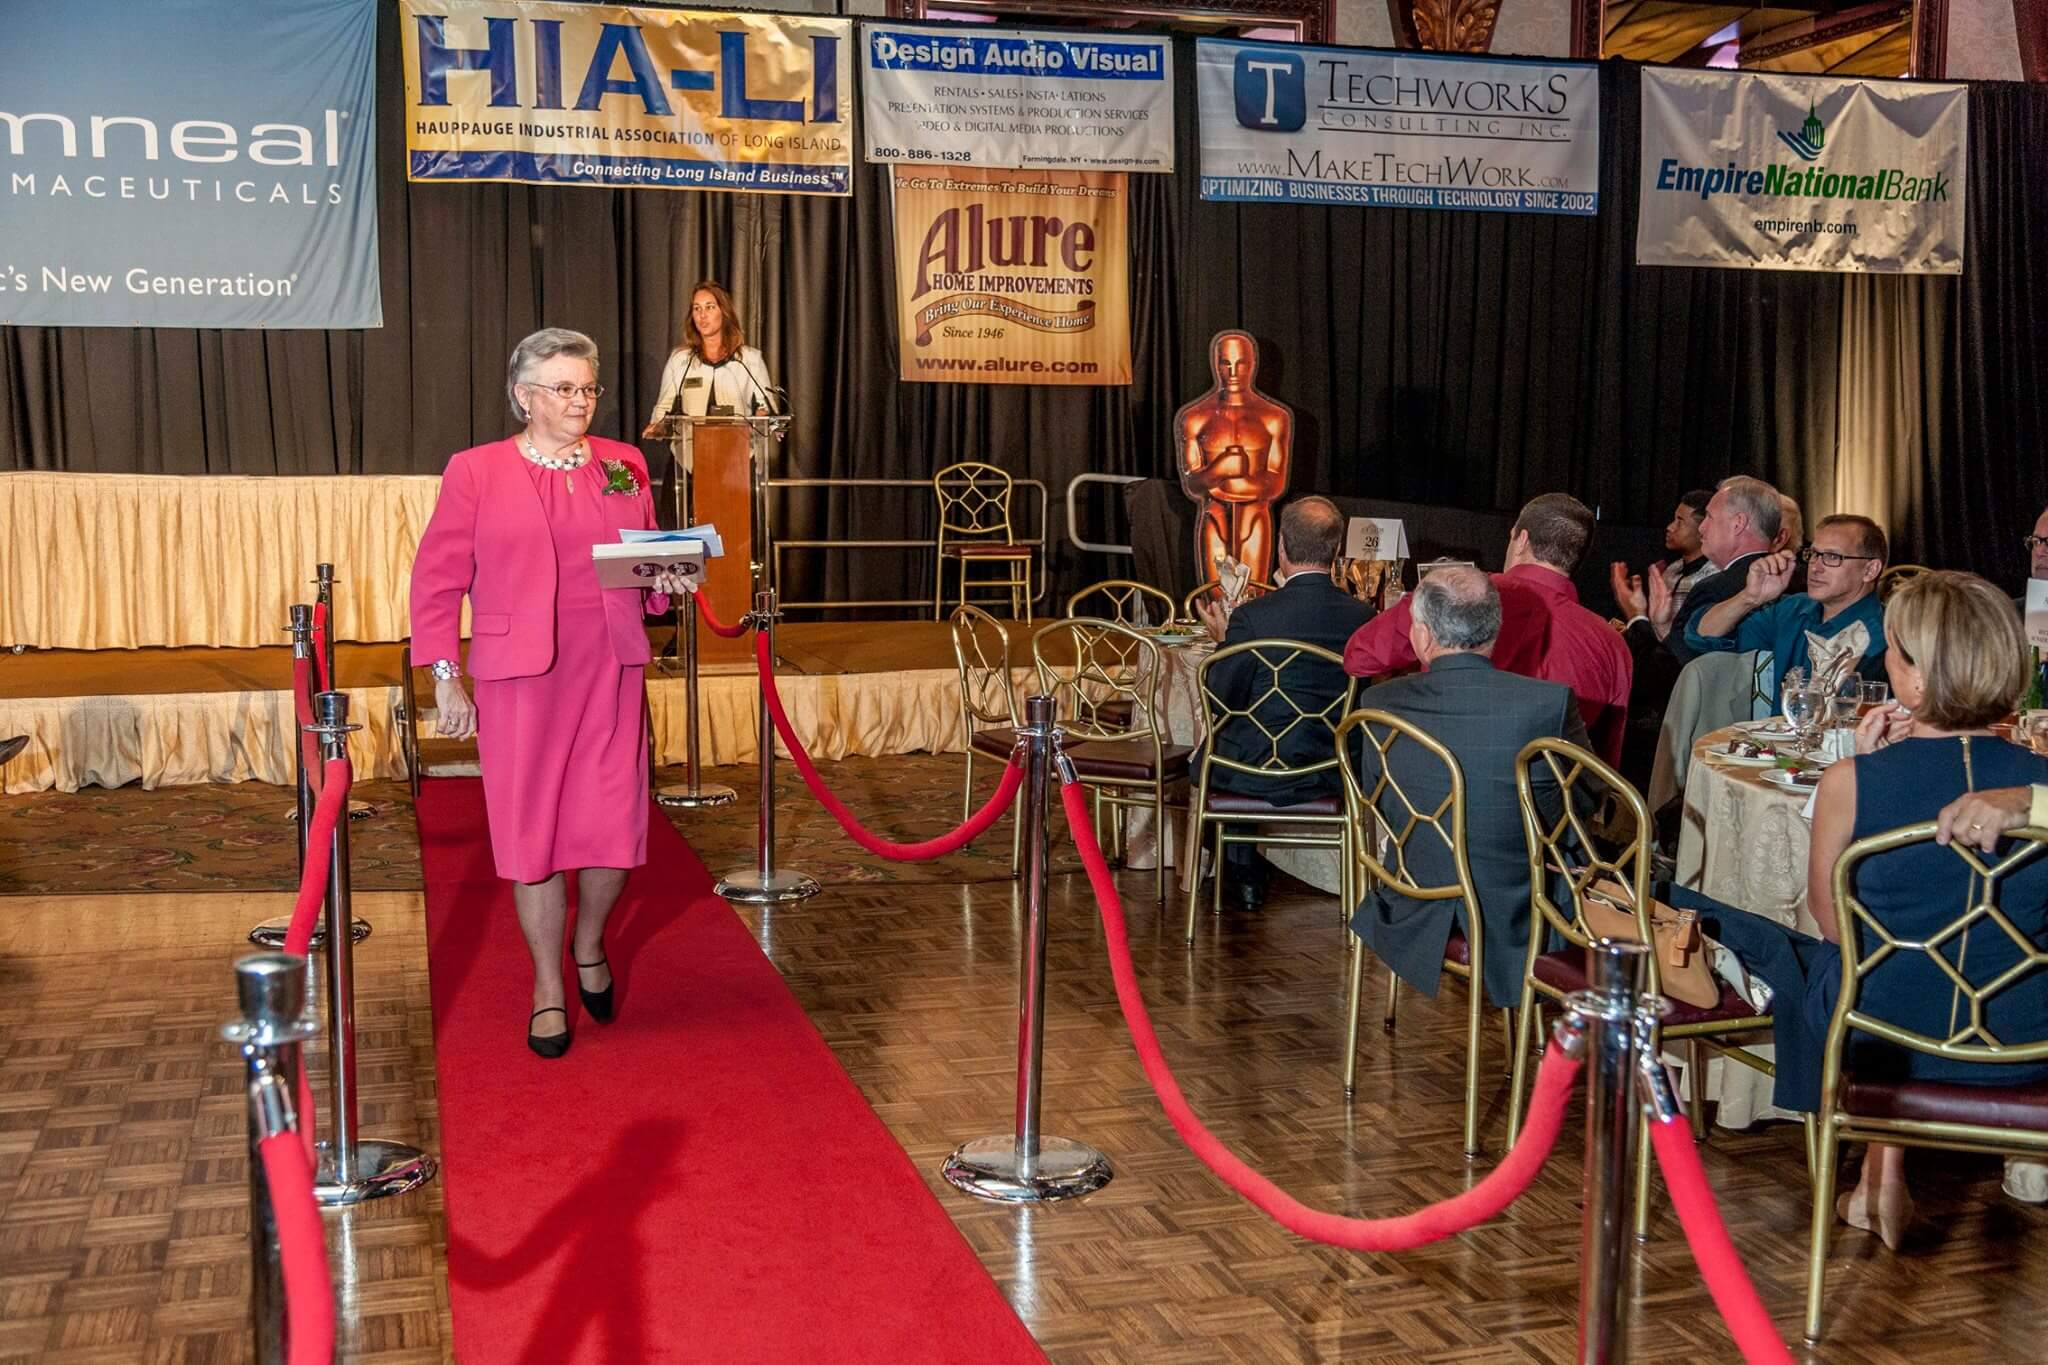 HIA, Business Achievement Awards